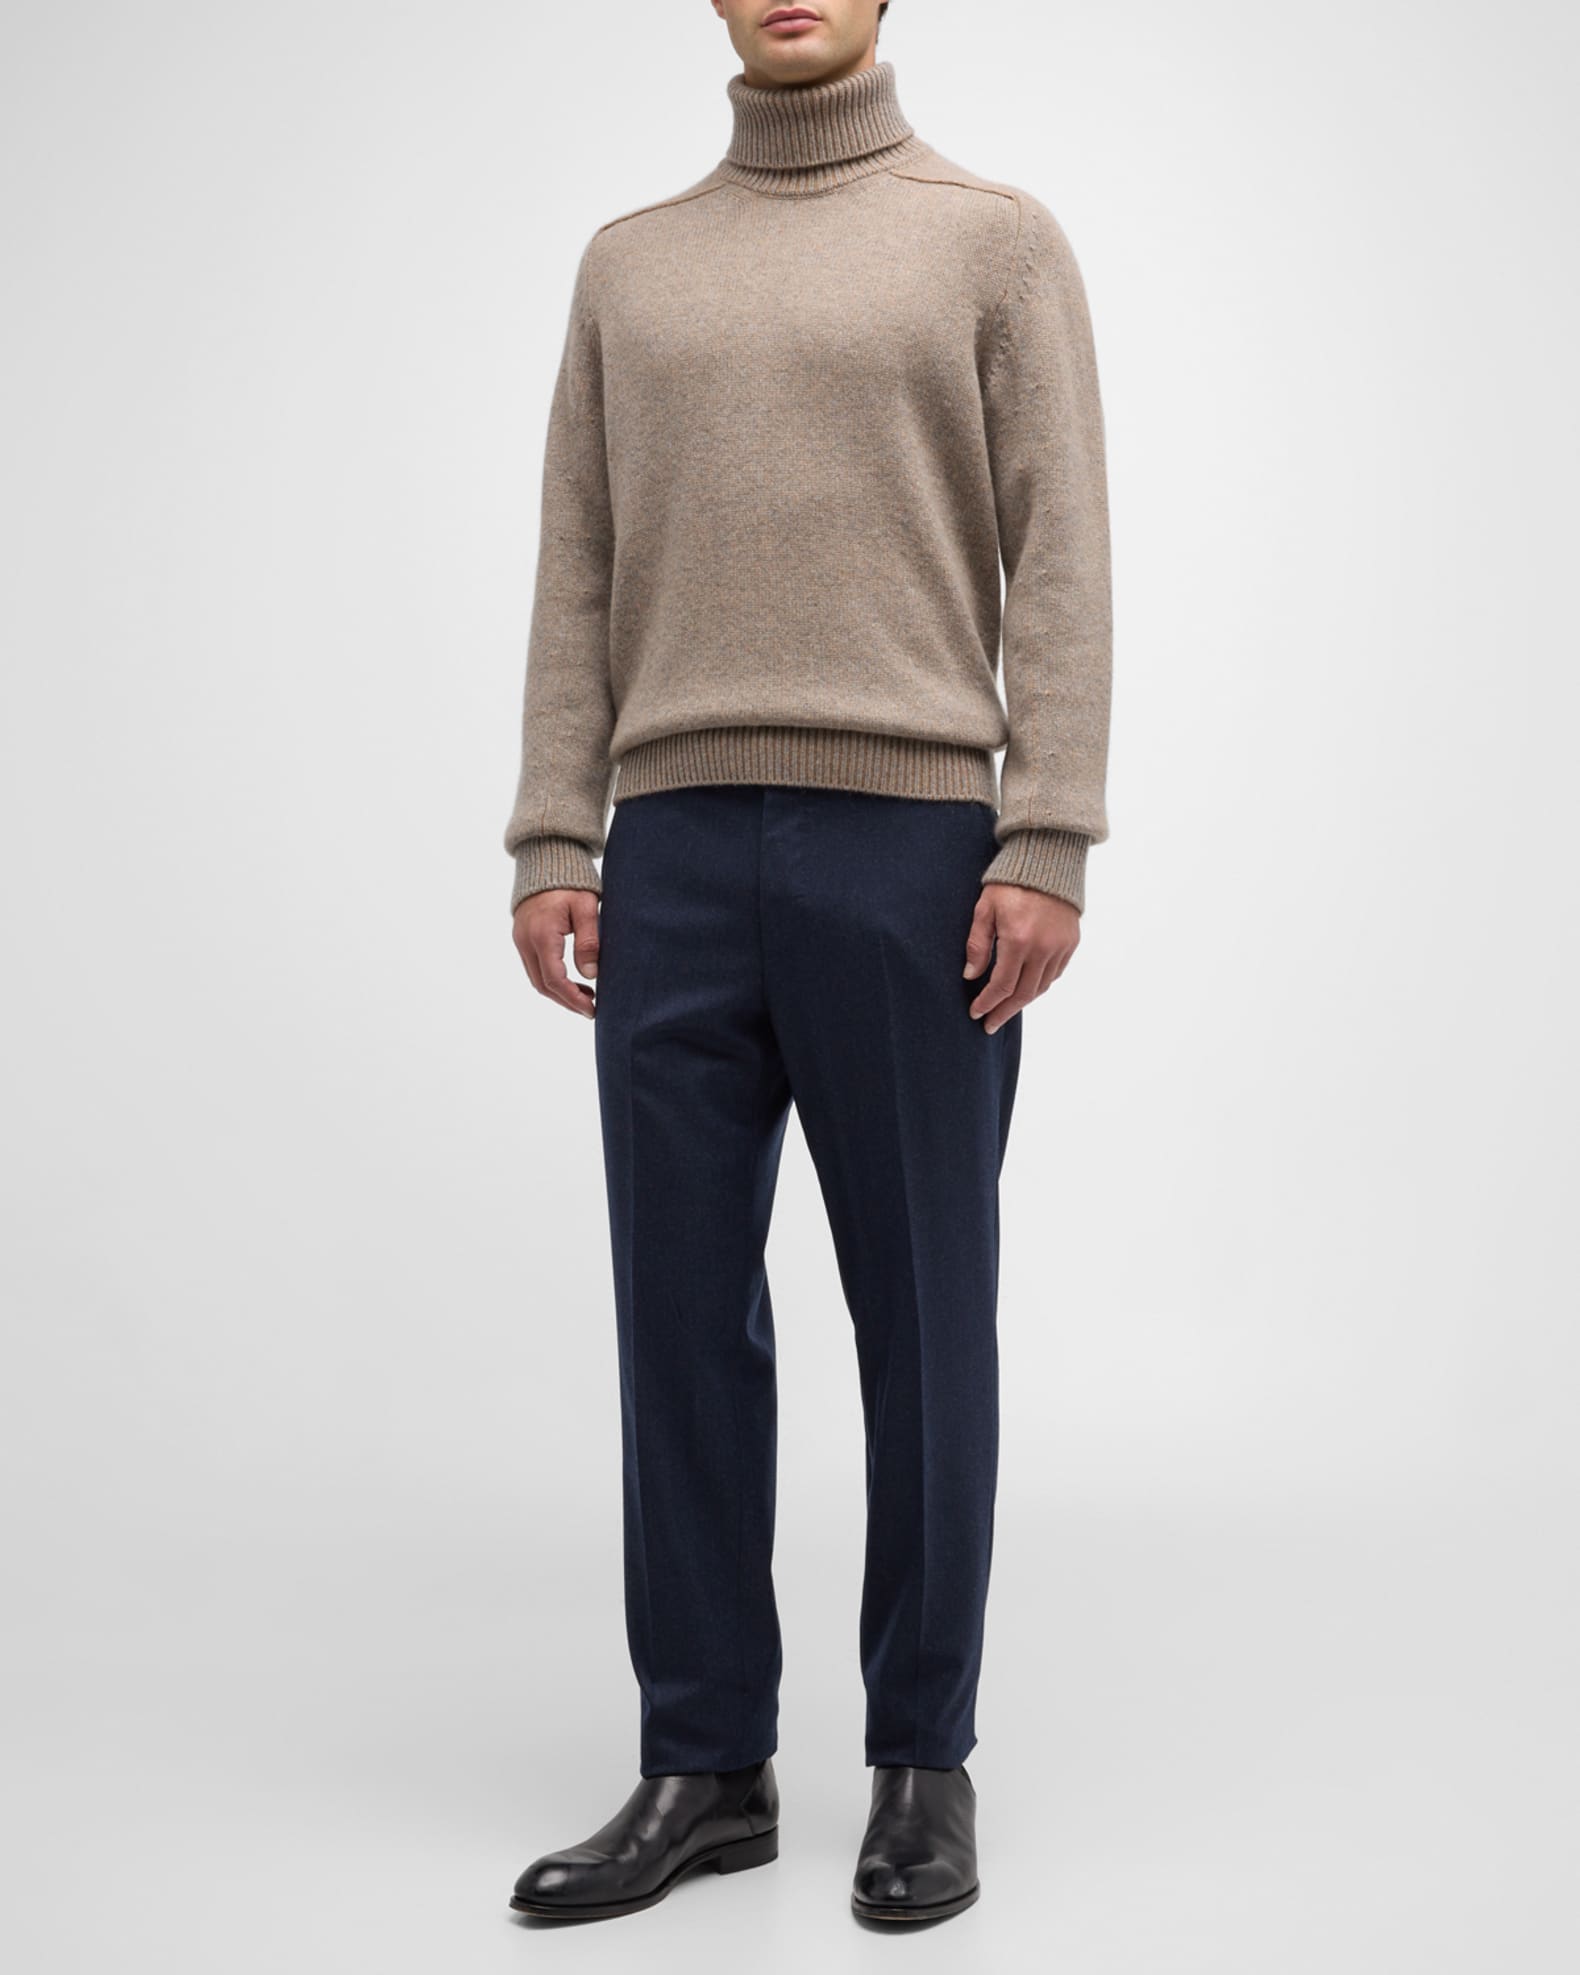 ZEGNA Men's Oasi Cashmere Knit Turtleneck Sweater | Neiman Marcus